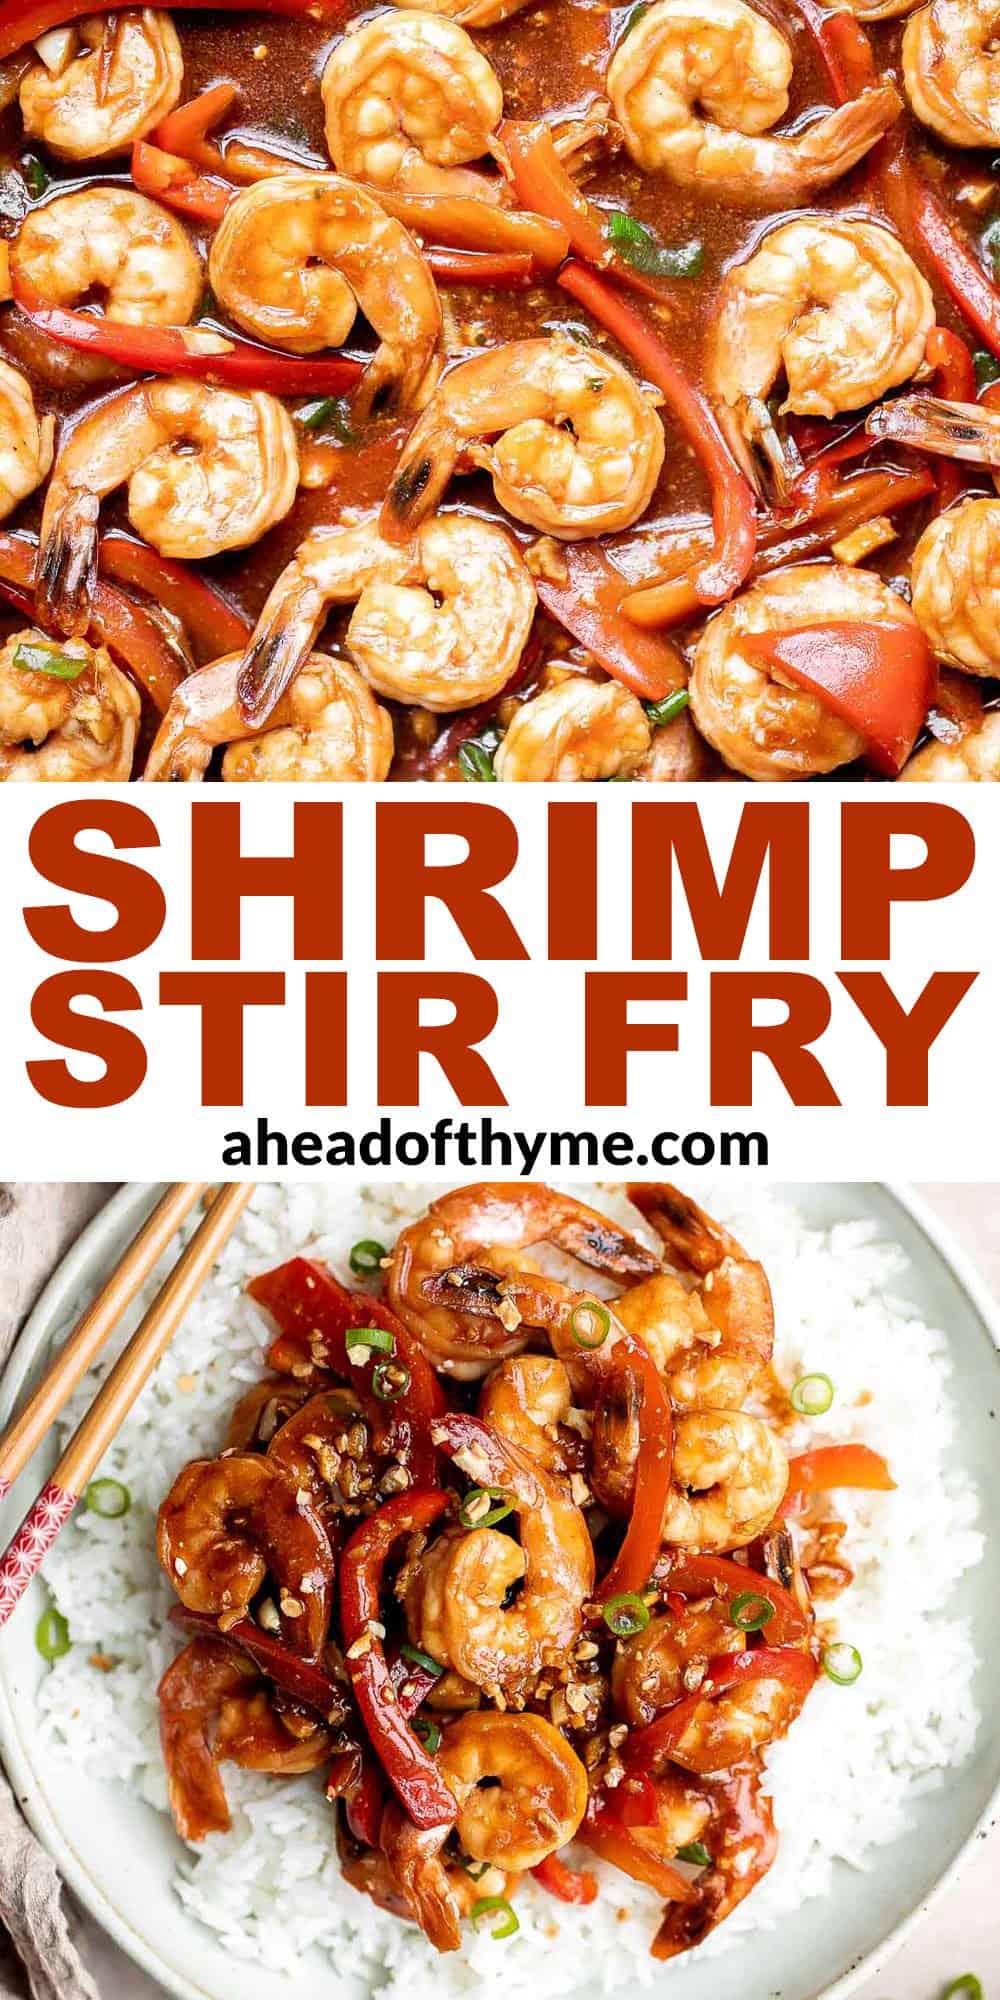 Garlic Shrimp Stir Fry